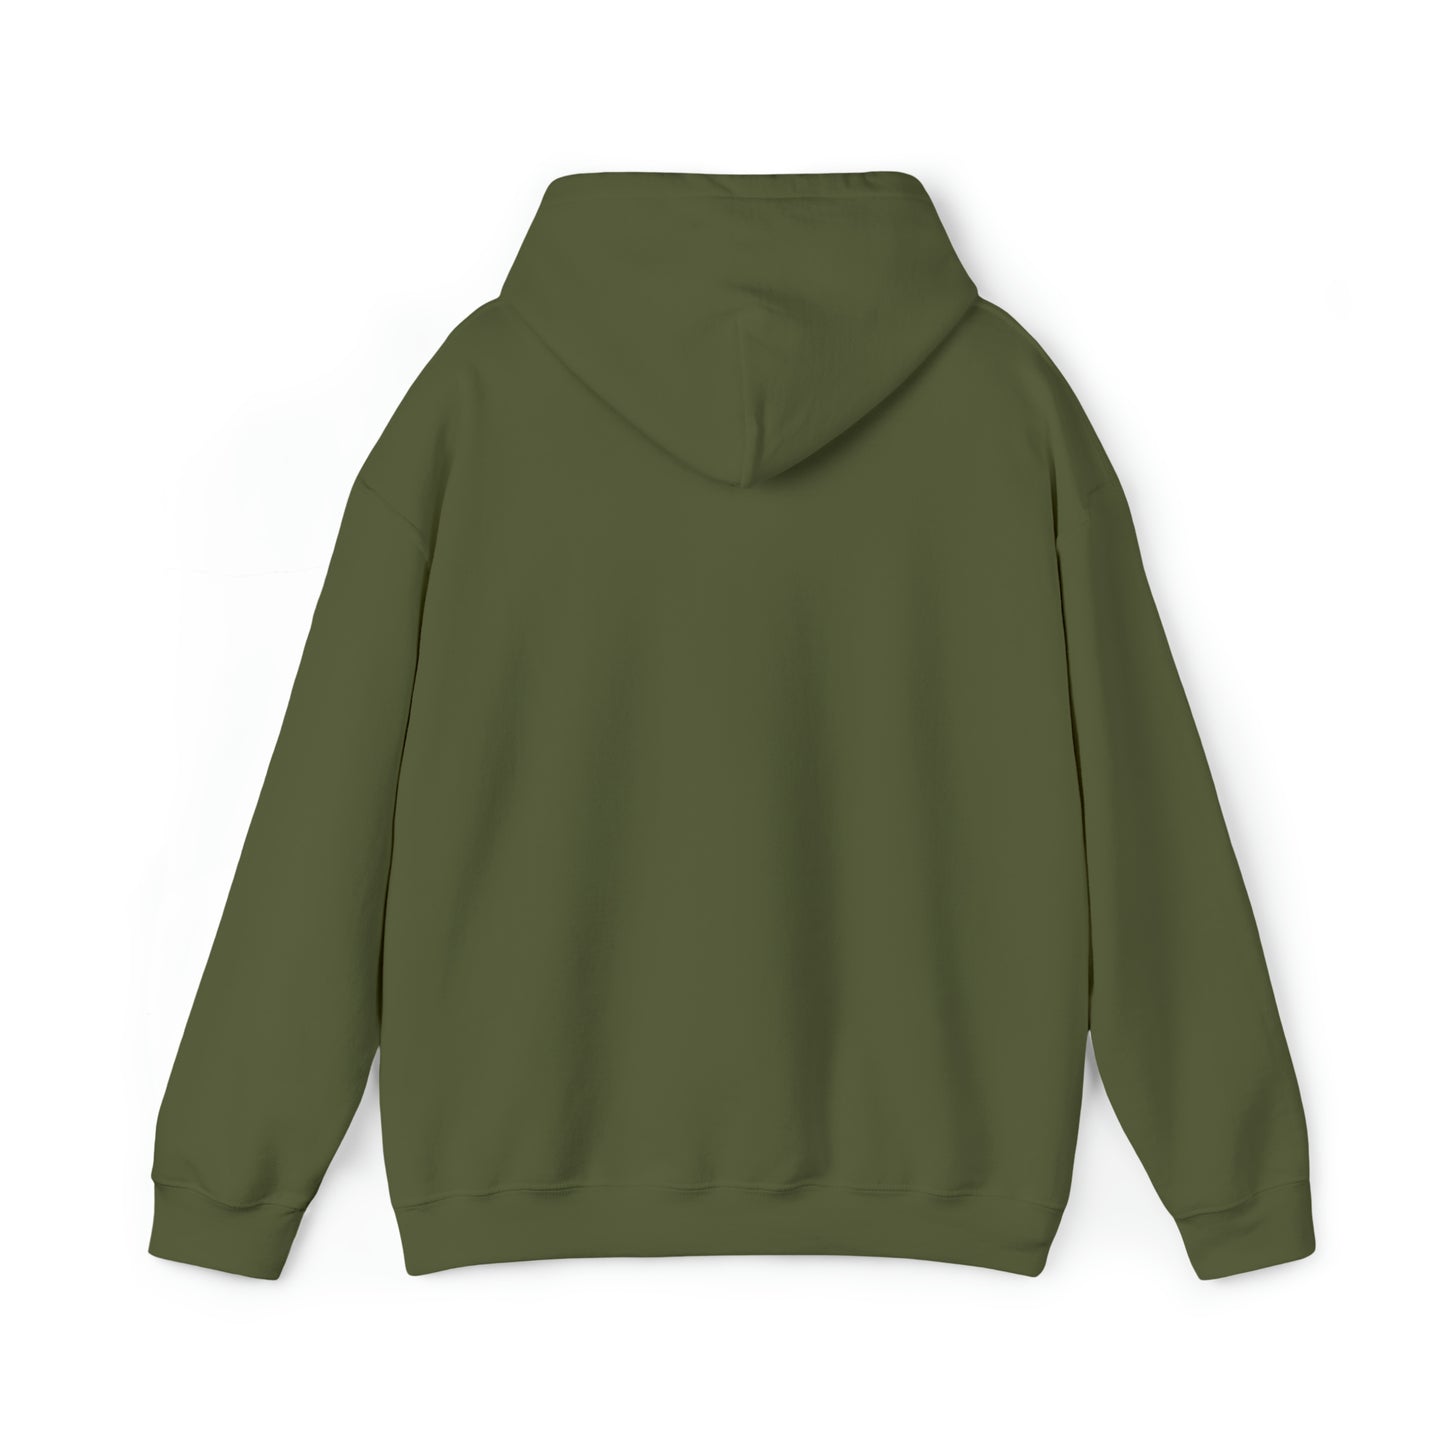 The Godfather Unisex Heavy Blend™ Hooded Sweatshirt